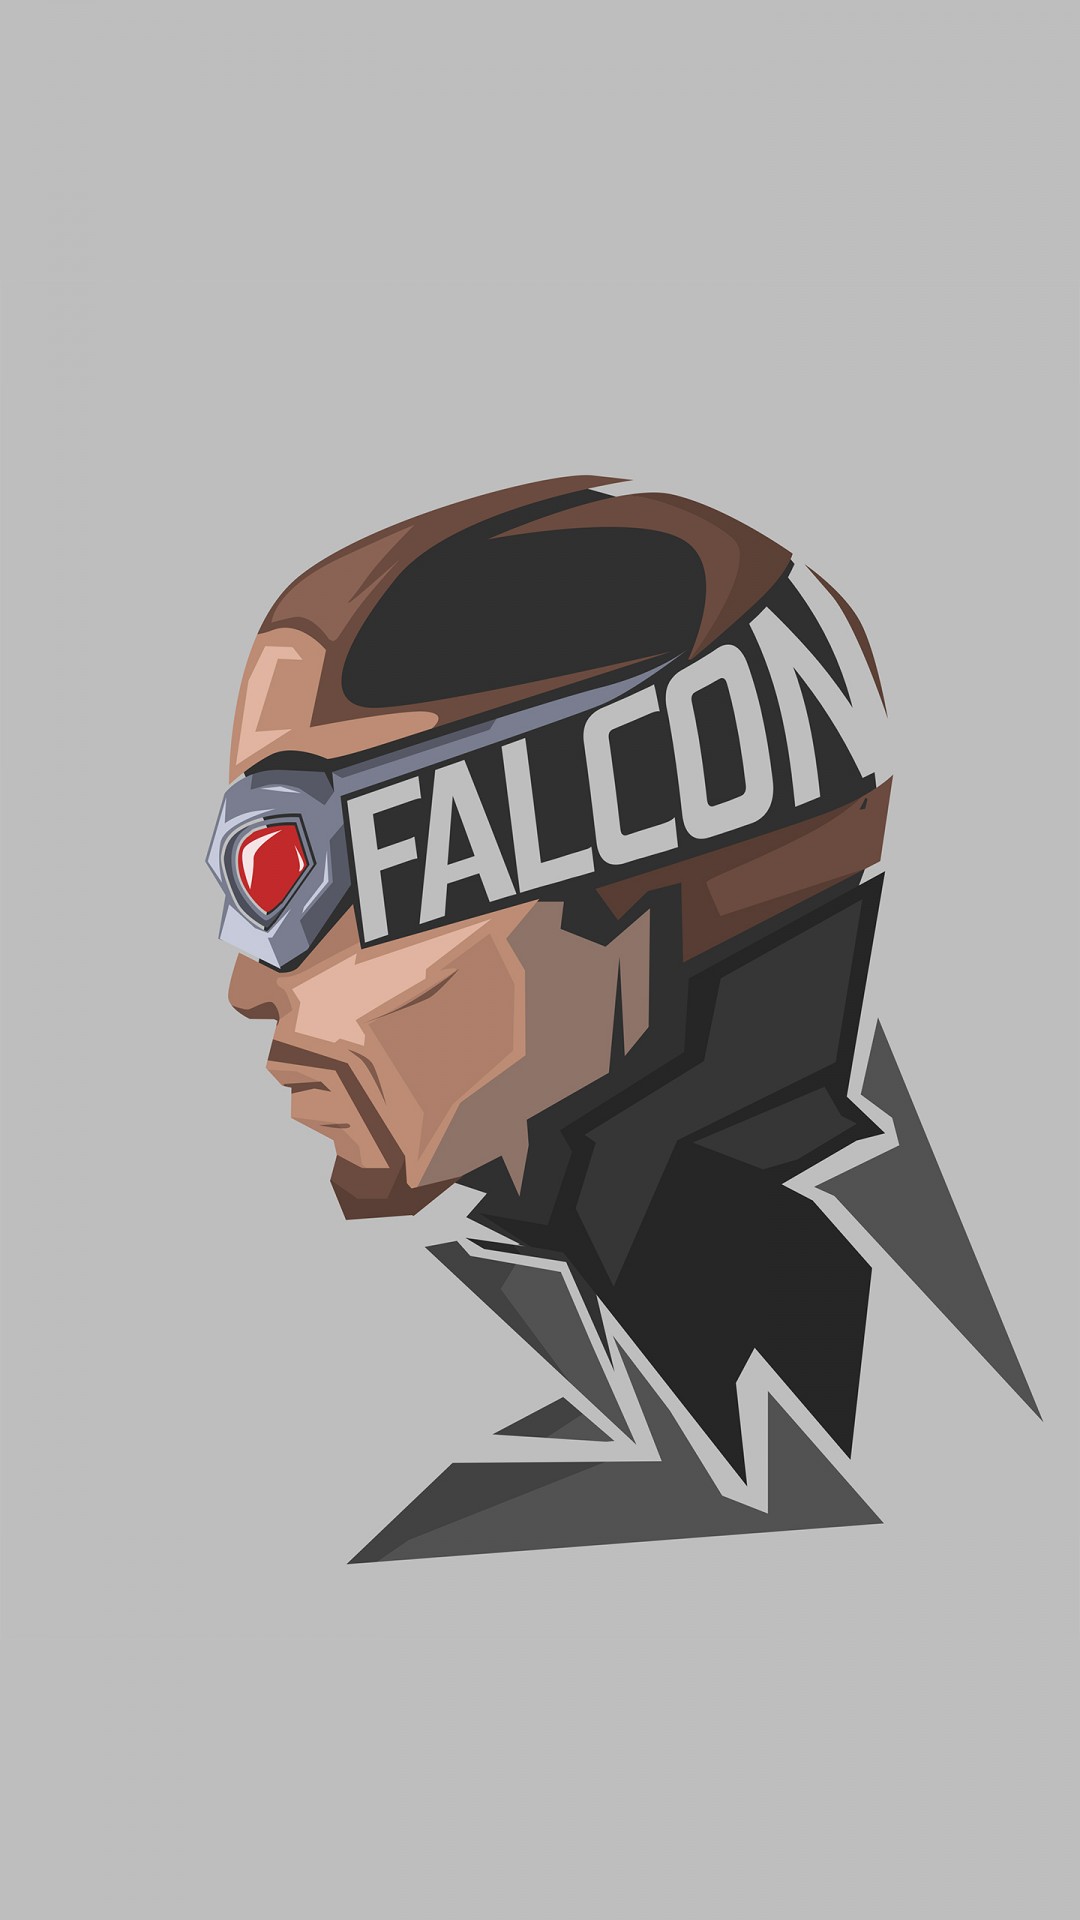 Falcon Marvel Wallpaper Teahub Io